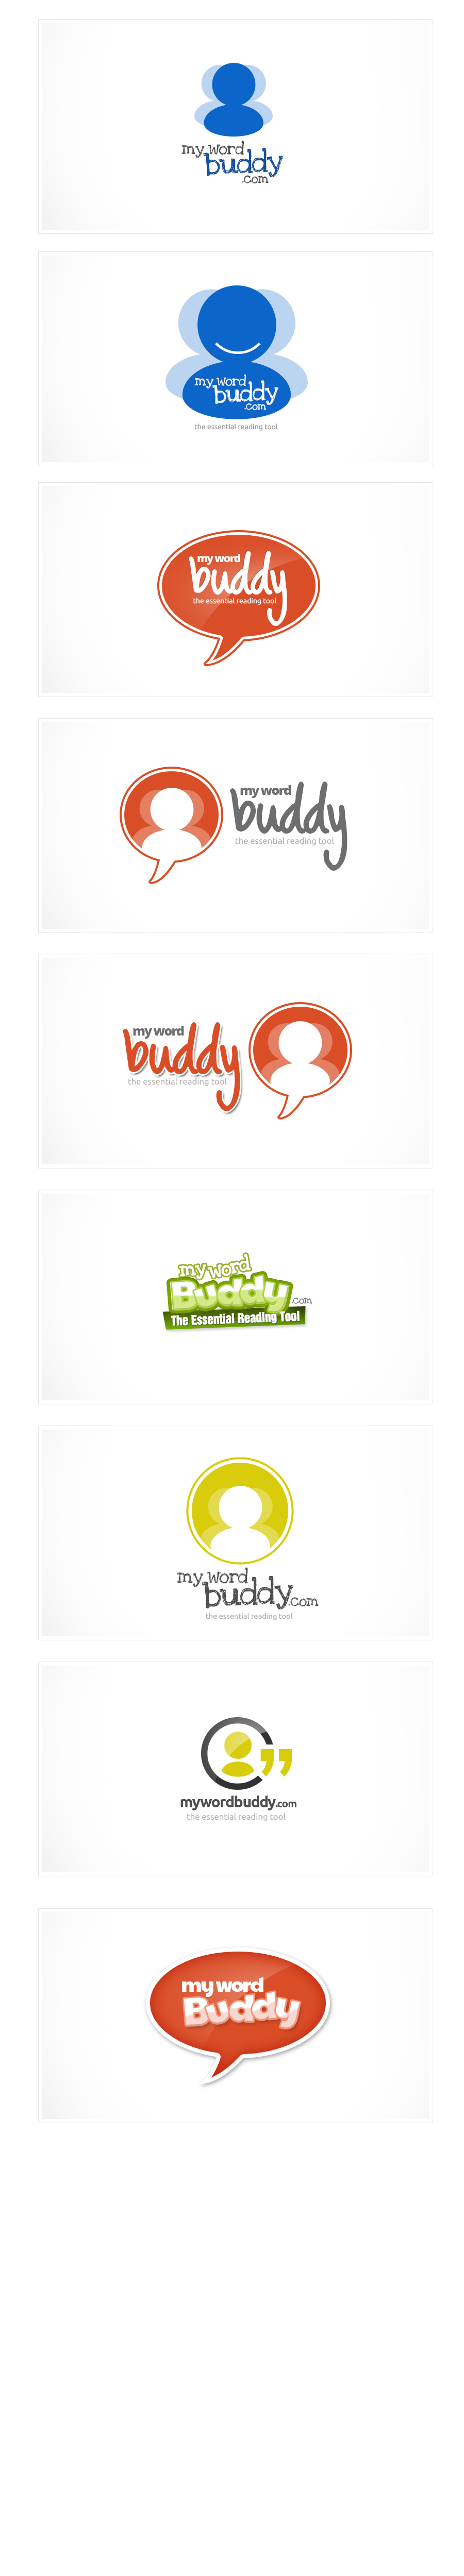 buddy_logos